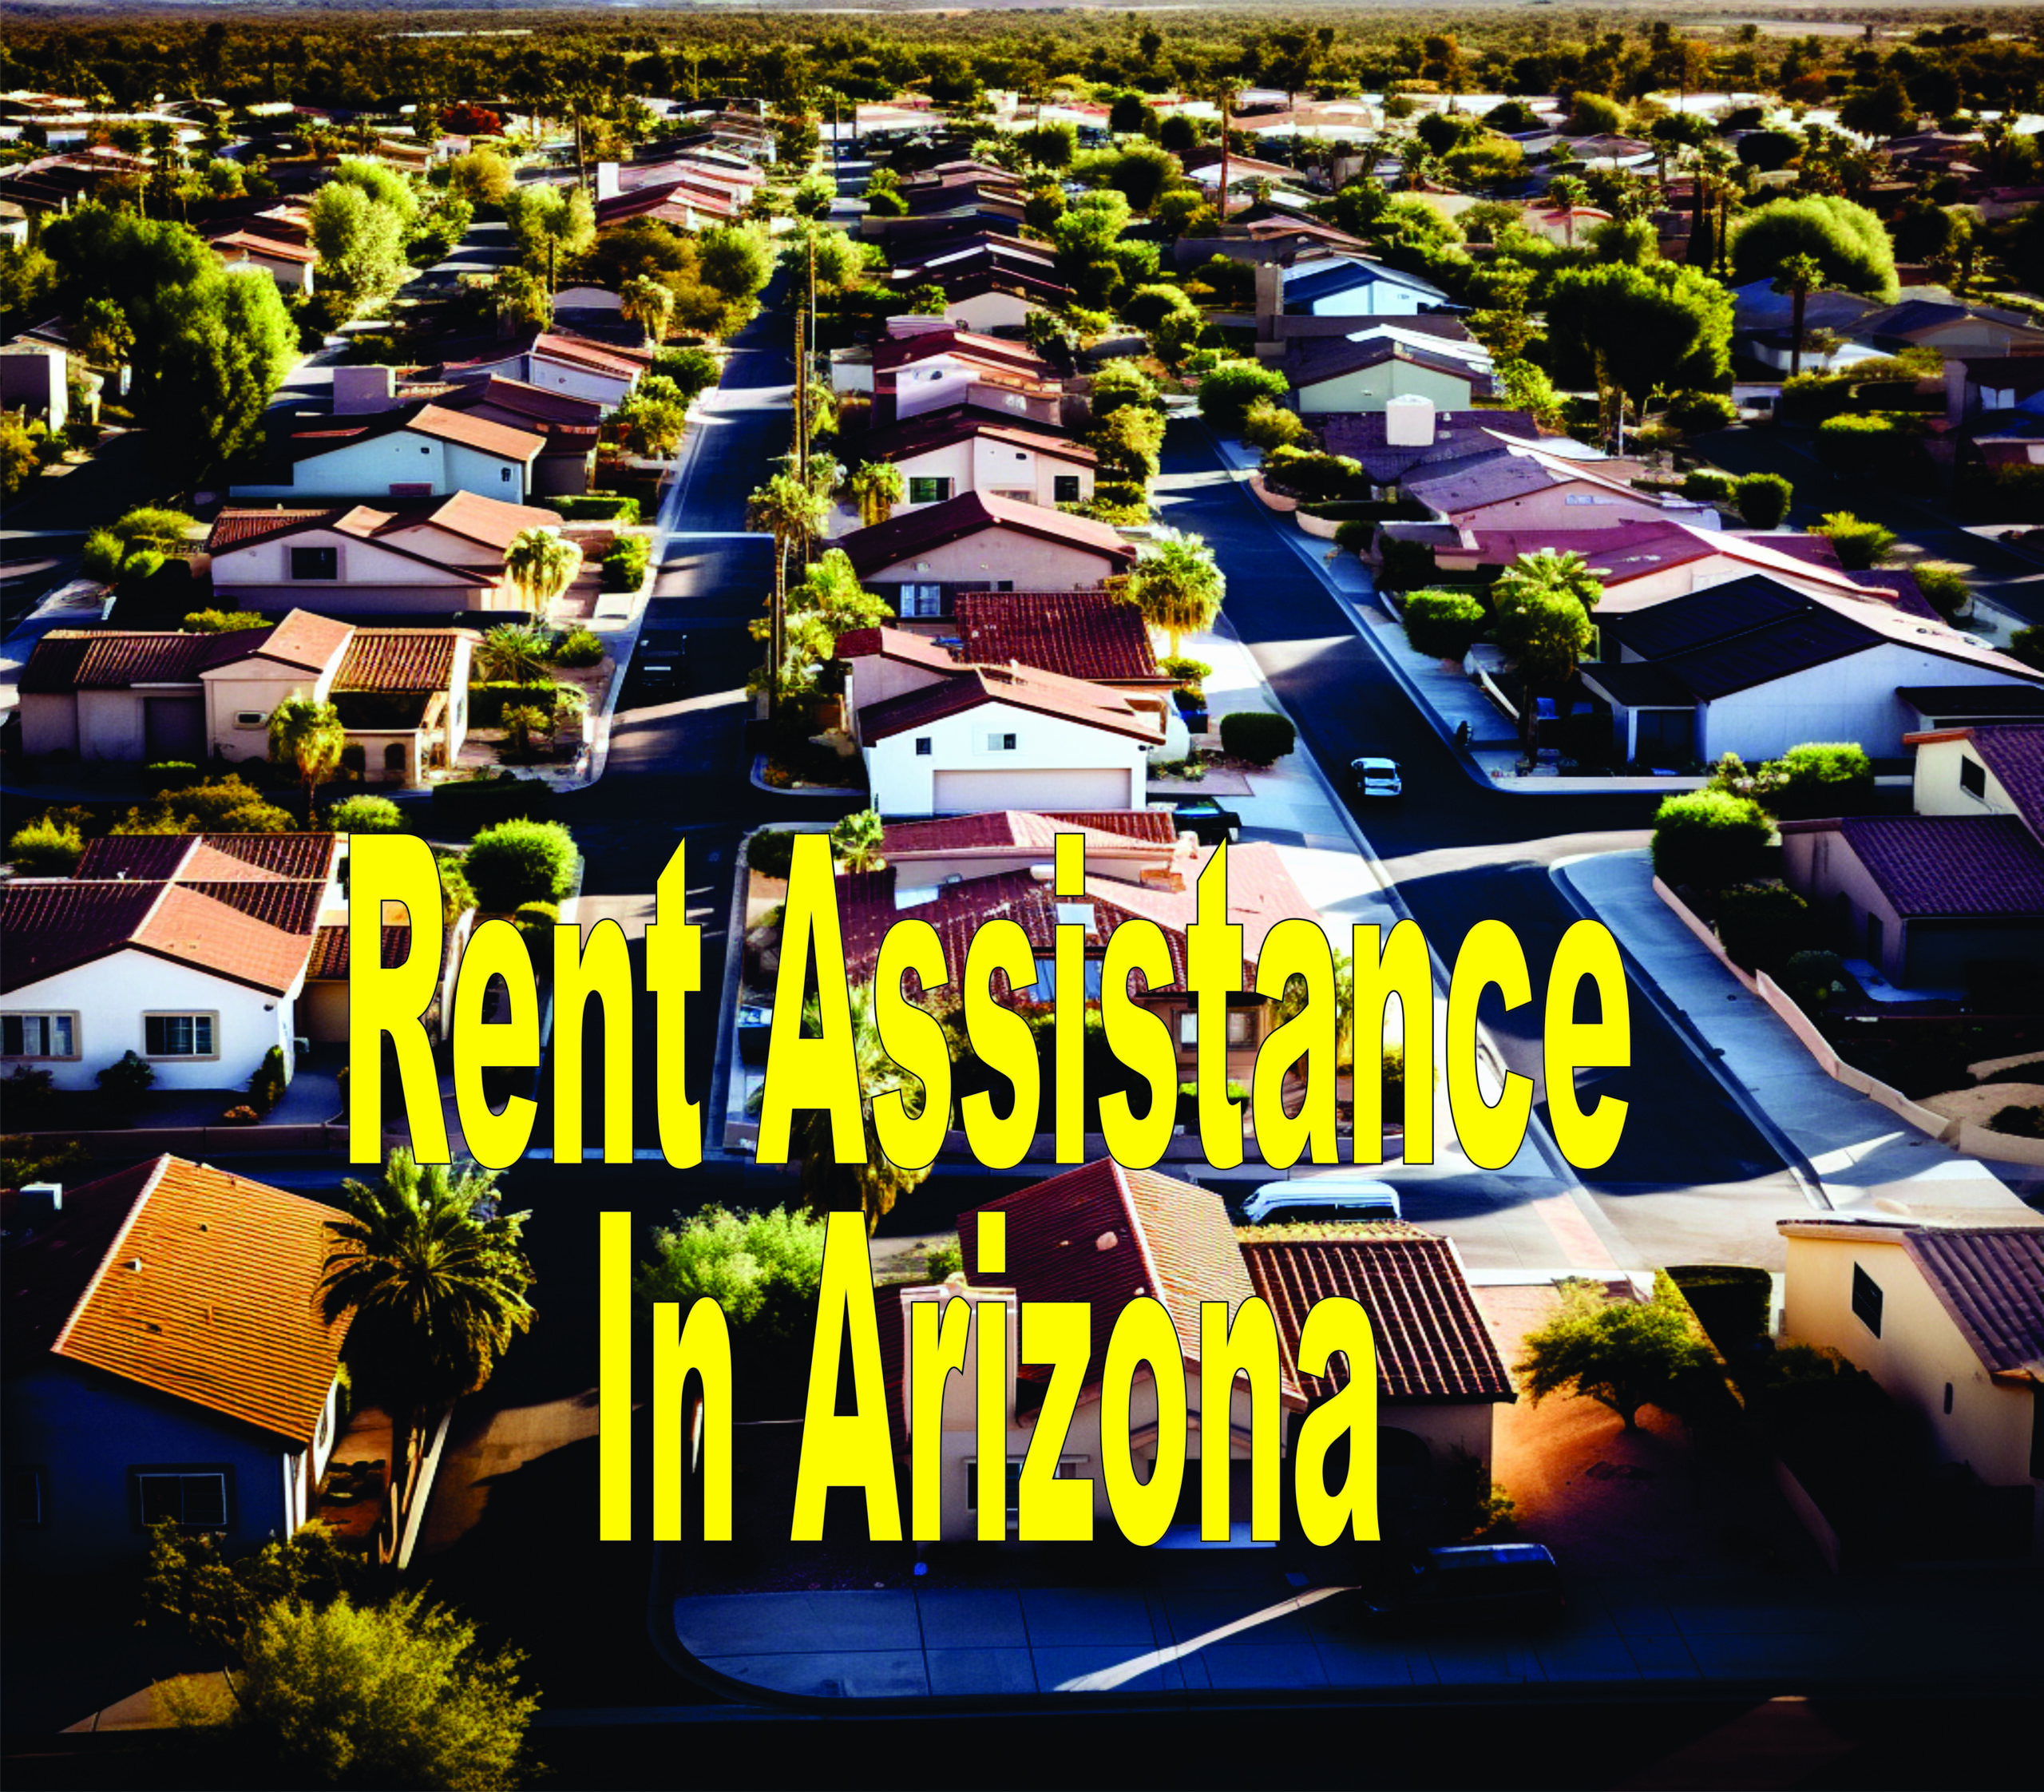 Rent Assistance In Arizona